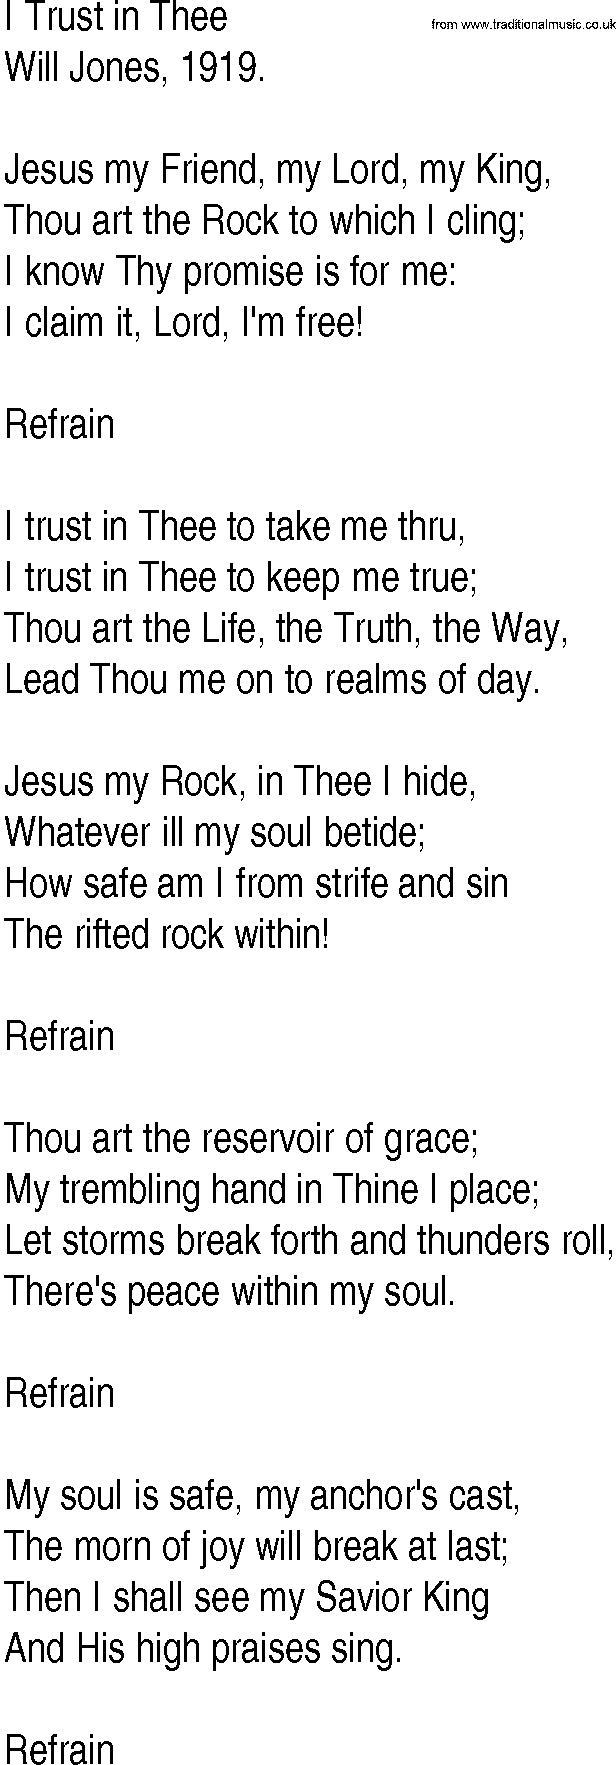 Hymn and Gospel Song: I Trust in Thee by Will Jones lyrics